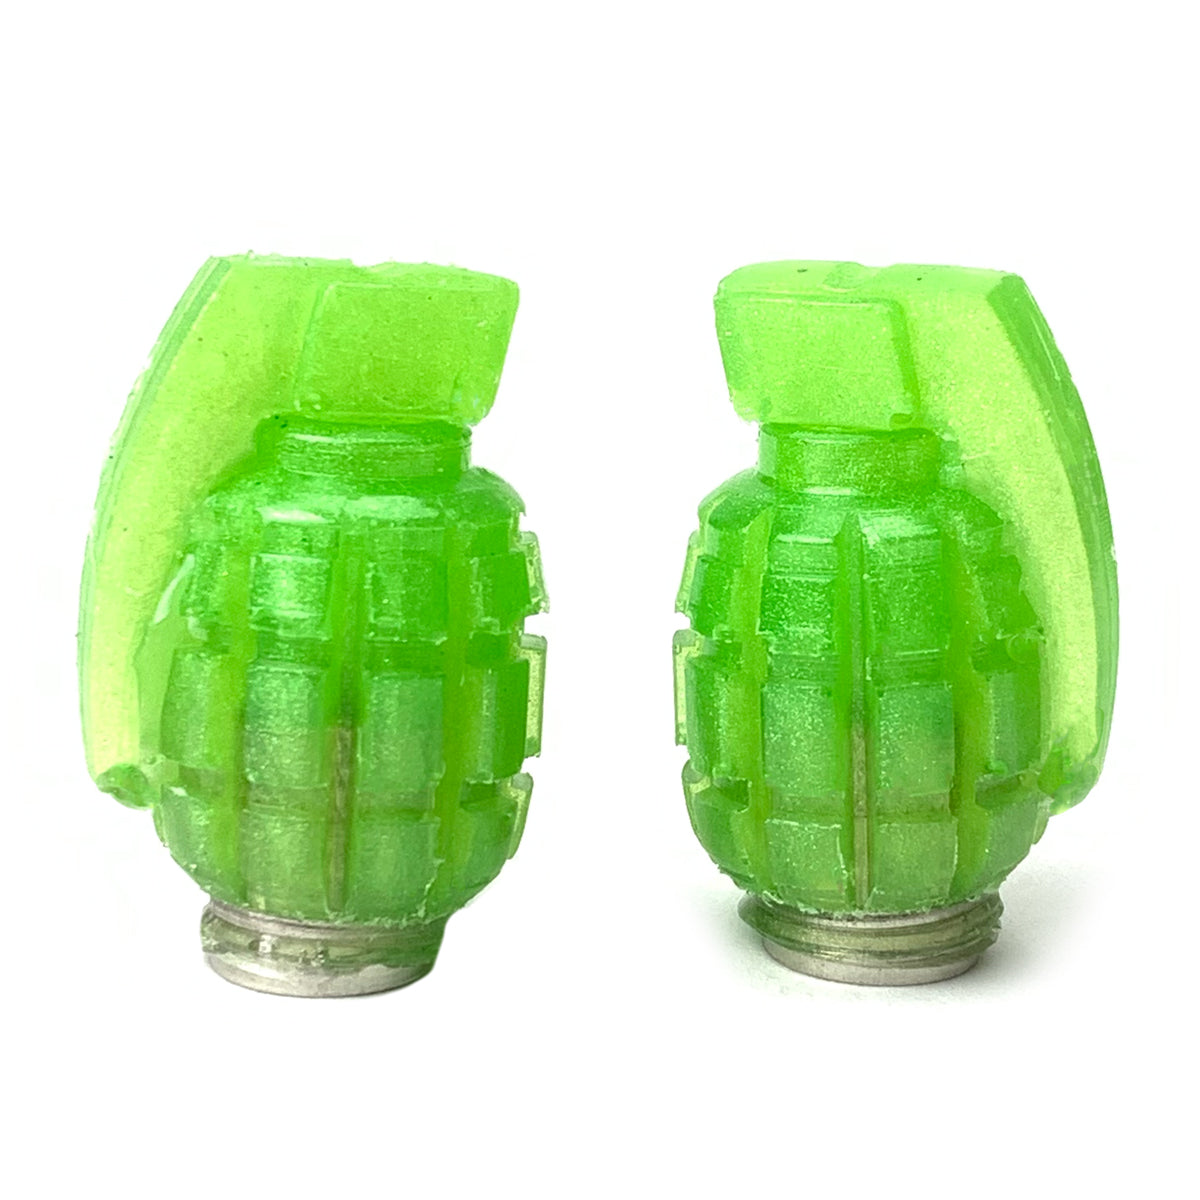 Grenade valve caps / green